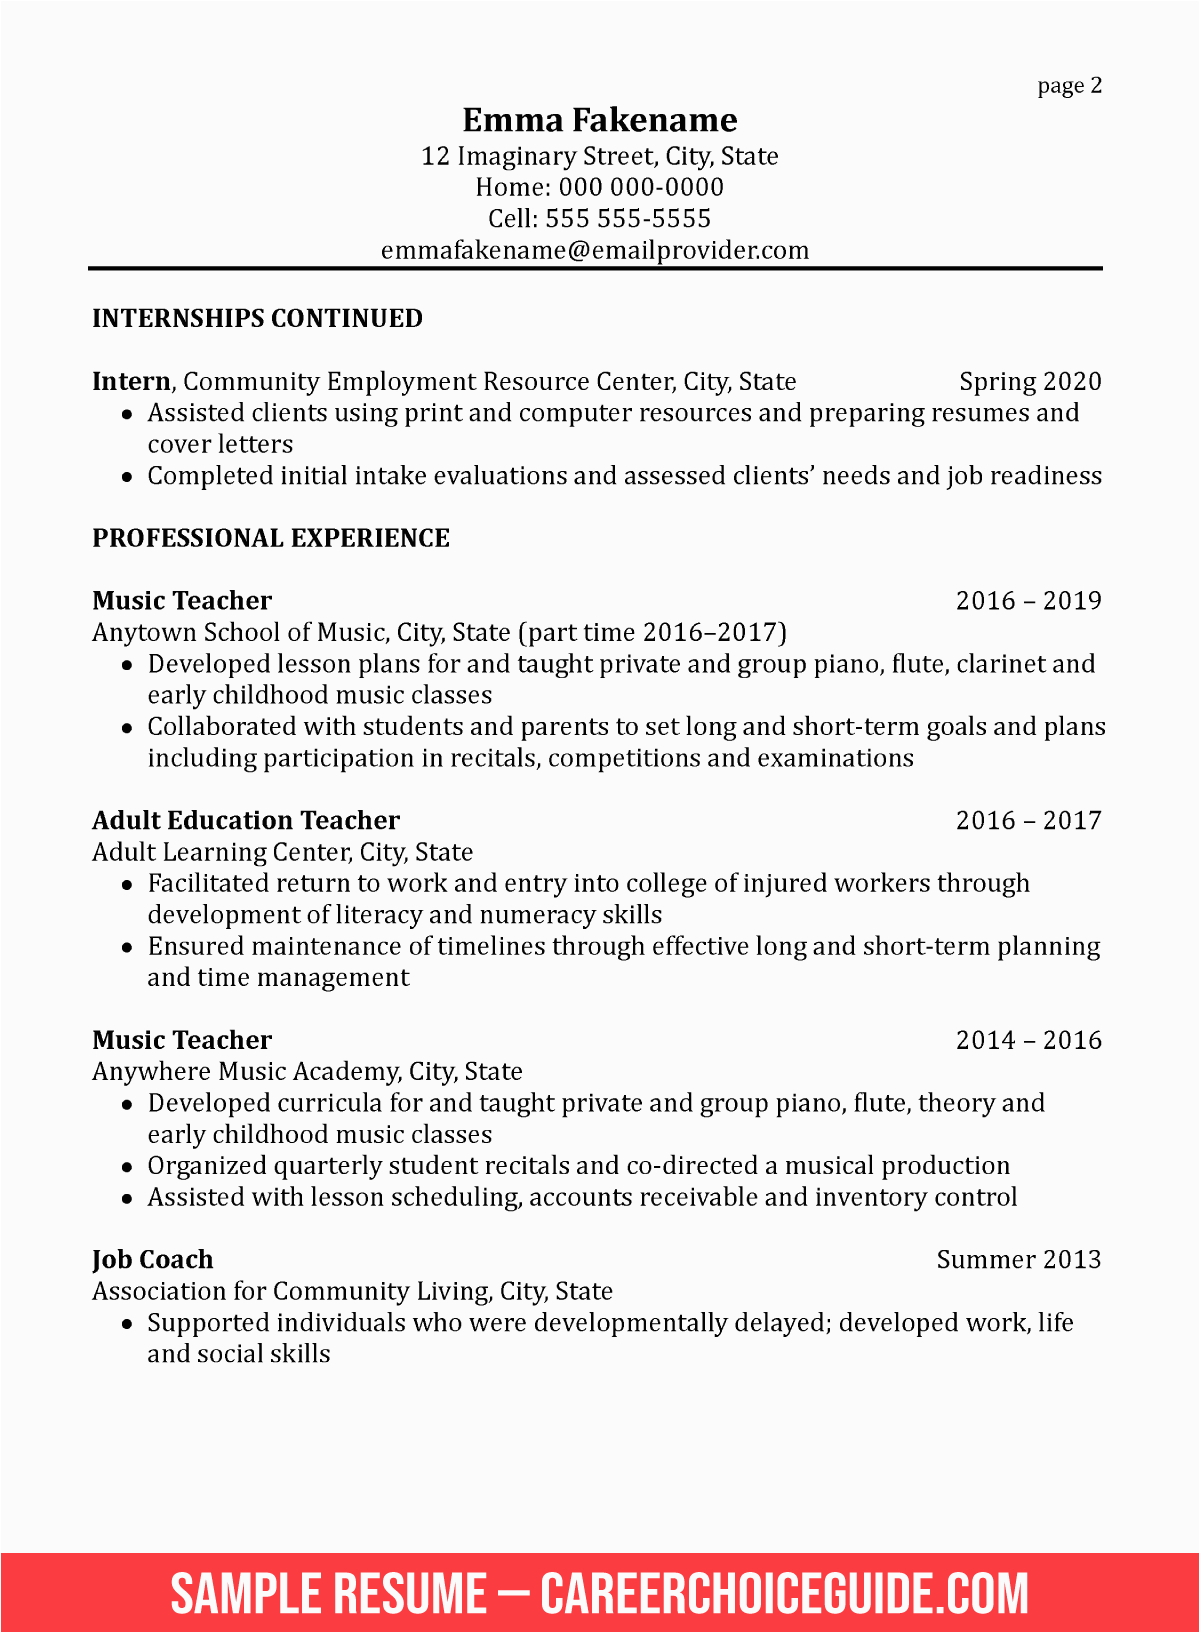 Sample Resume Profile for Career Change Career Change Resume Sample and Tips